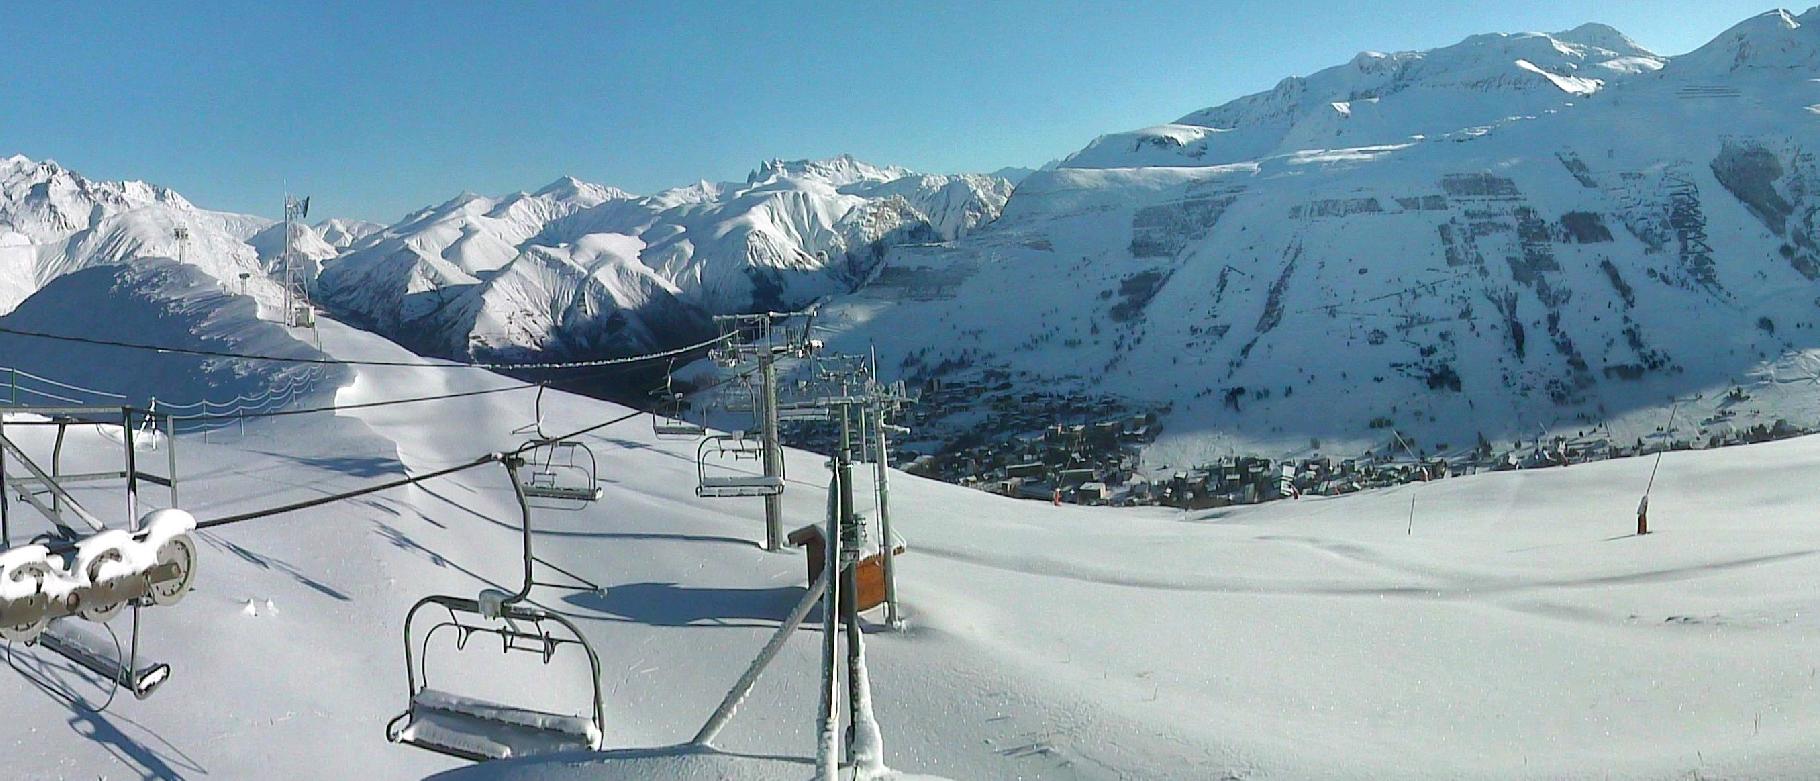 Webcam of Les Deux Alpes this morning